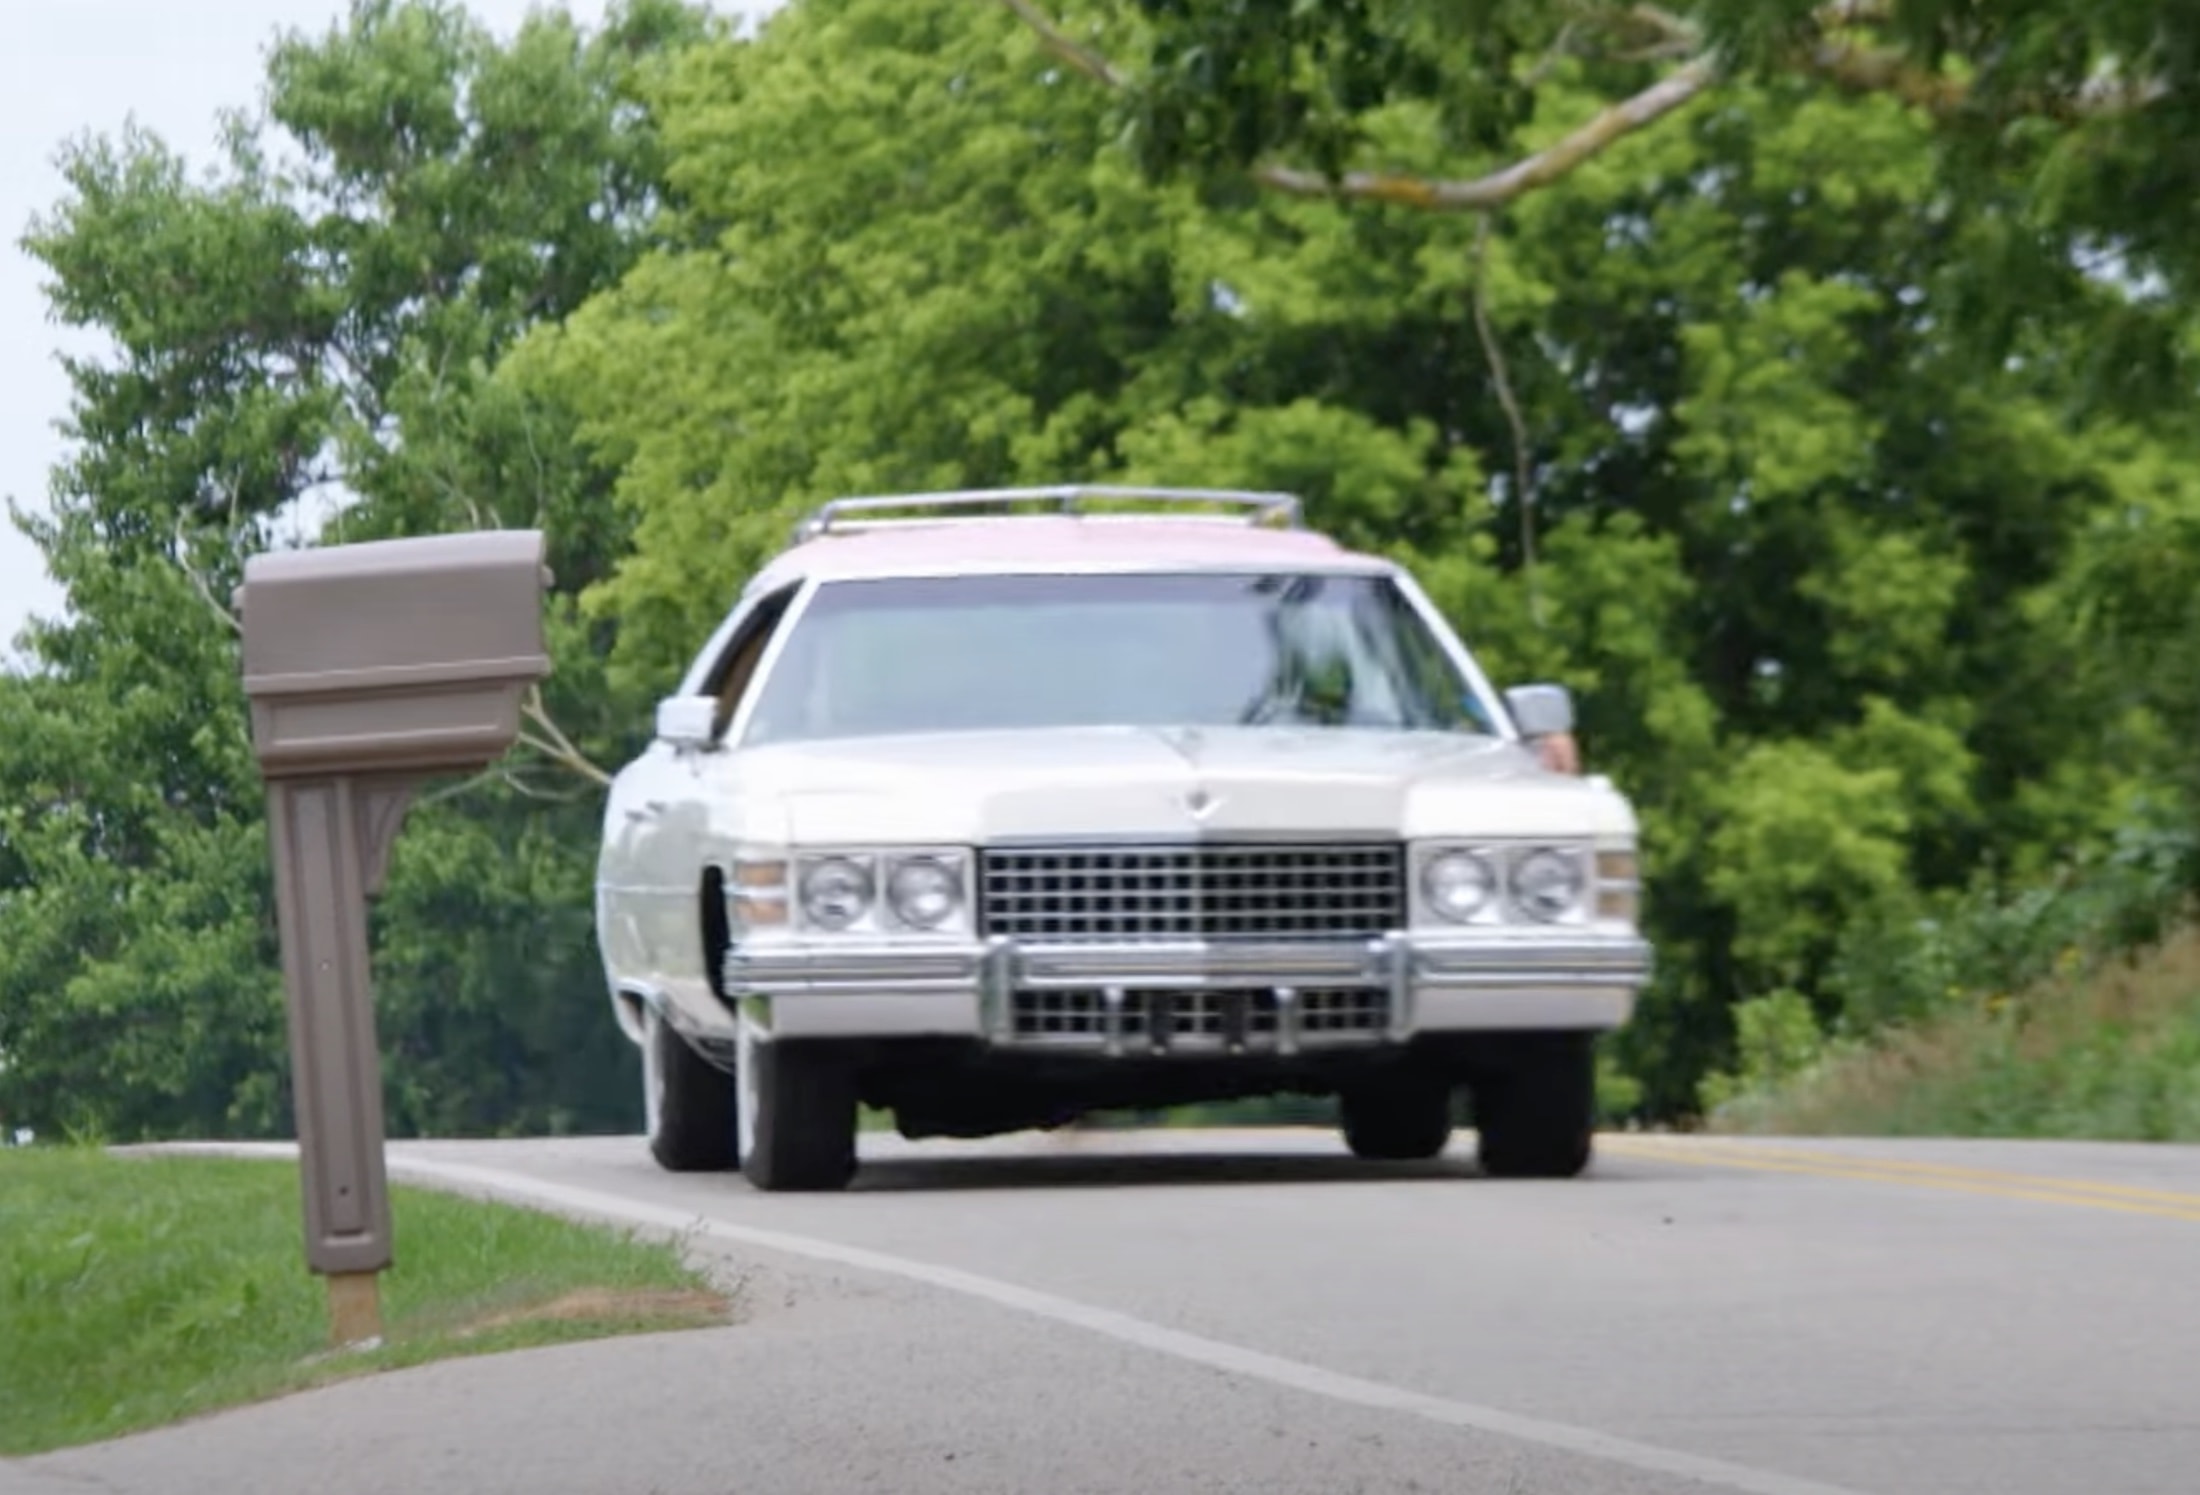 Elvis's Iconic Cadillac